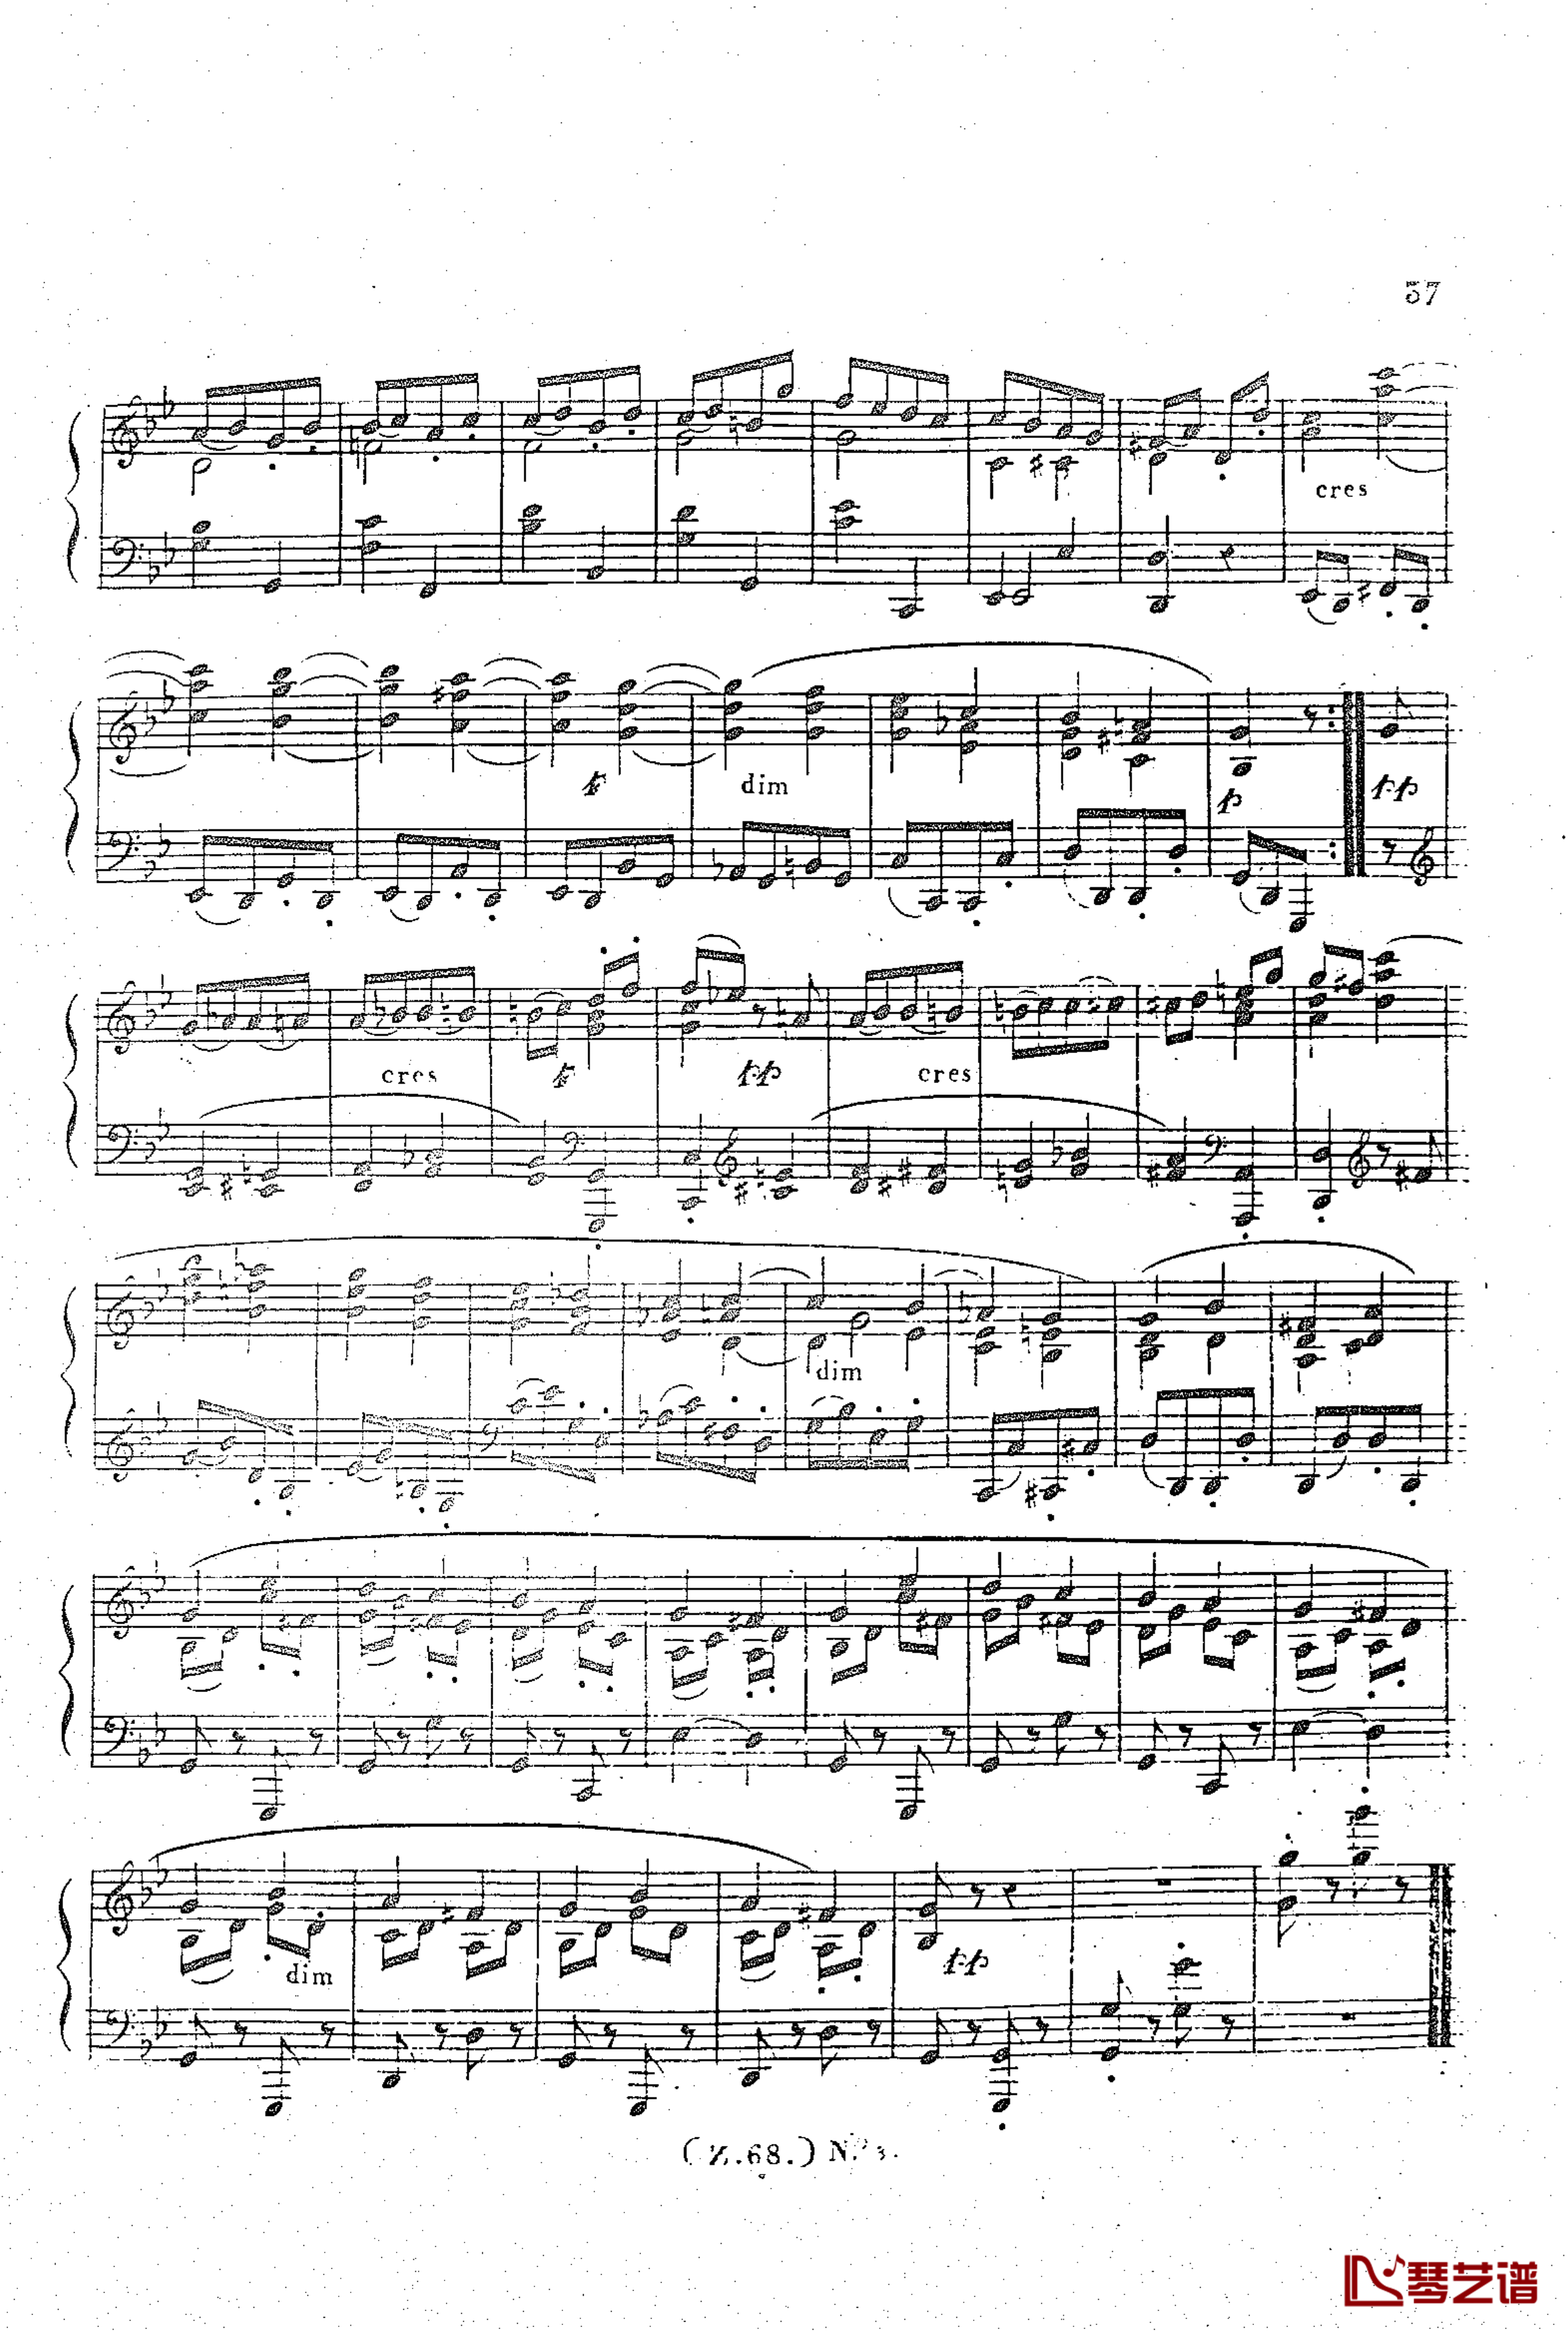  d小调第六钢琴奏鸣曲 Op.124钢琴谱-车尔尼-Czerny38